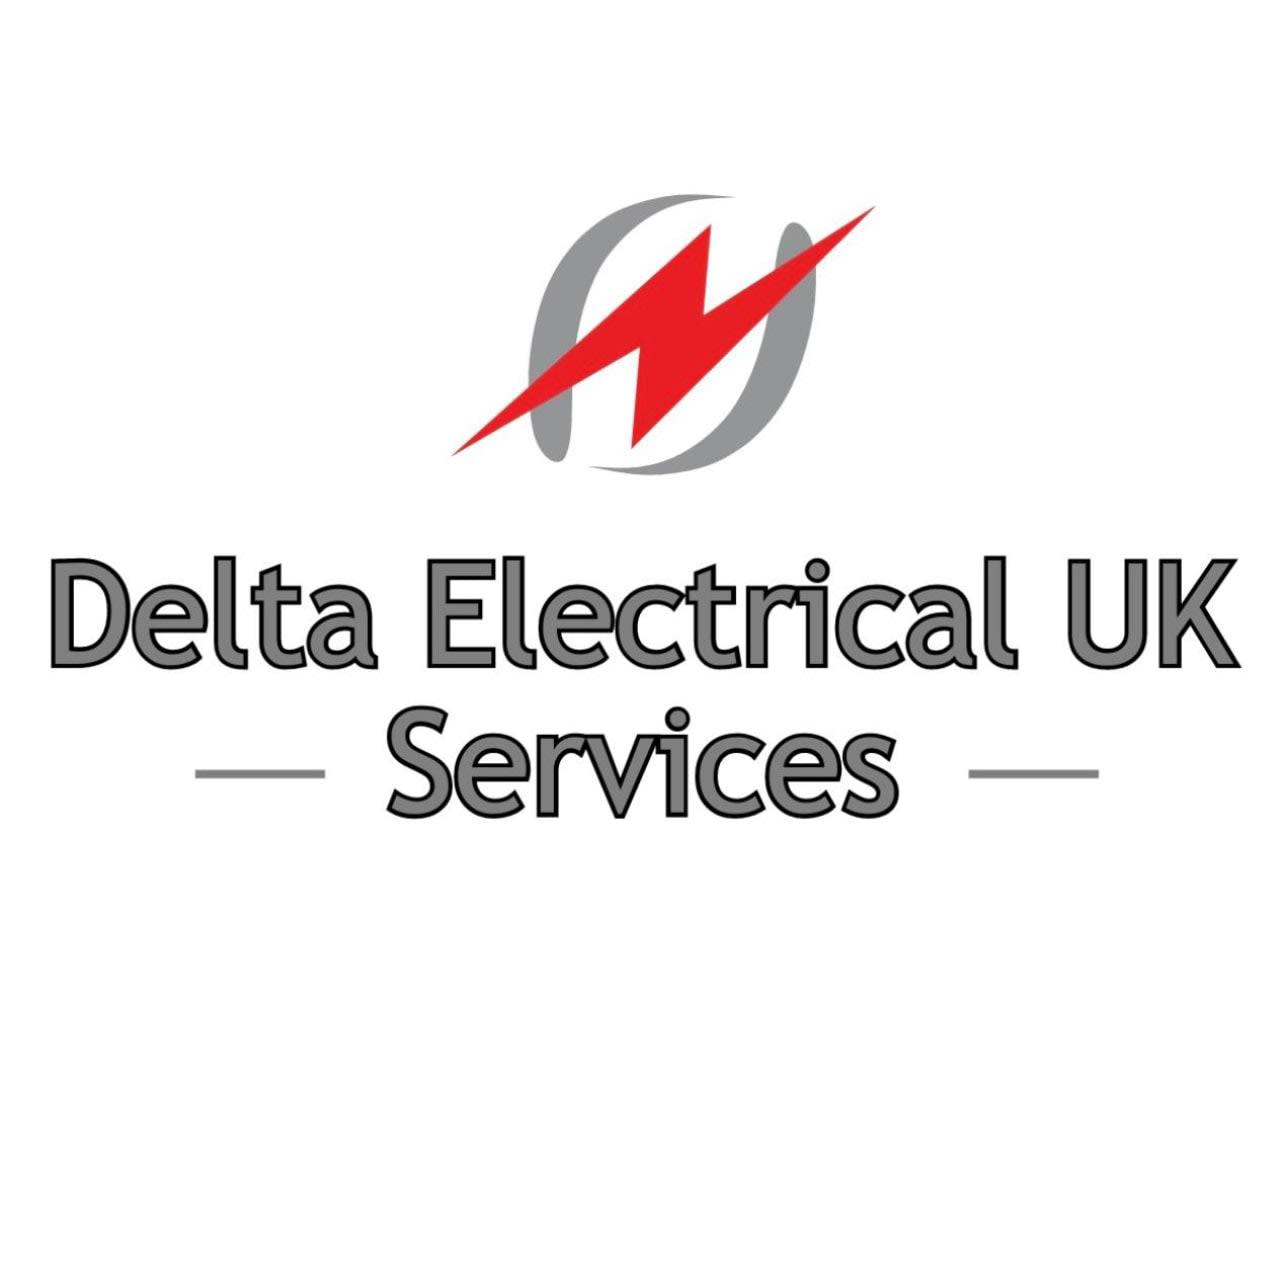 Delta Electrical UK Services logo